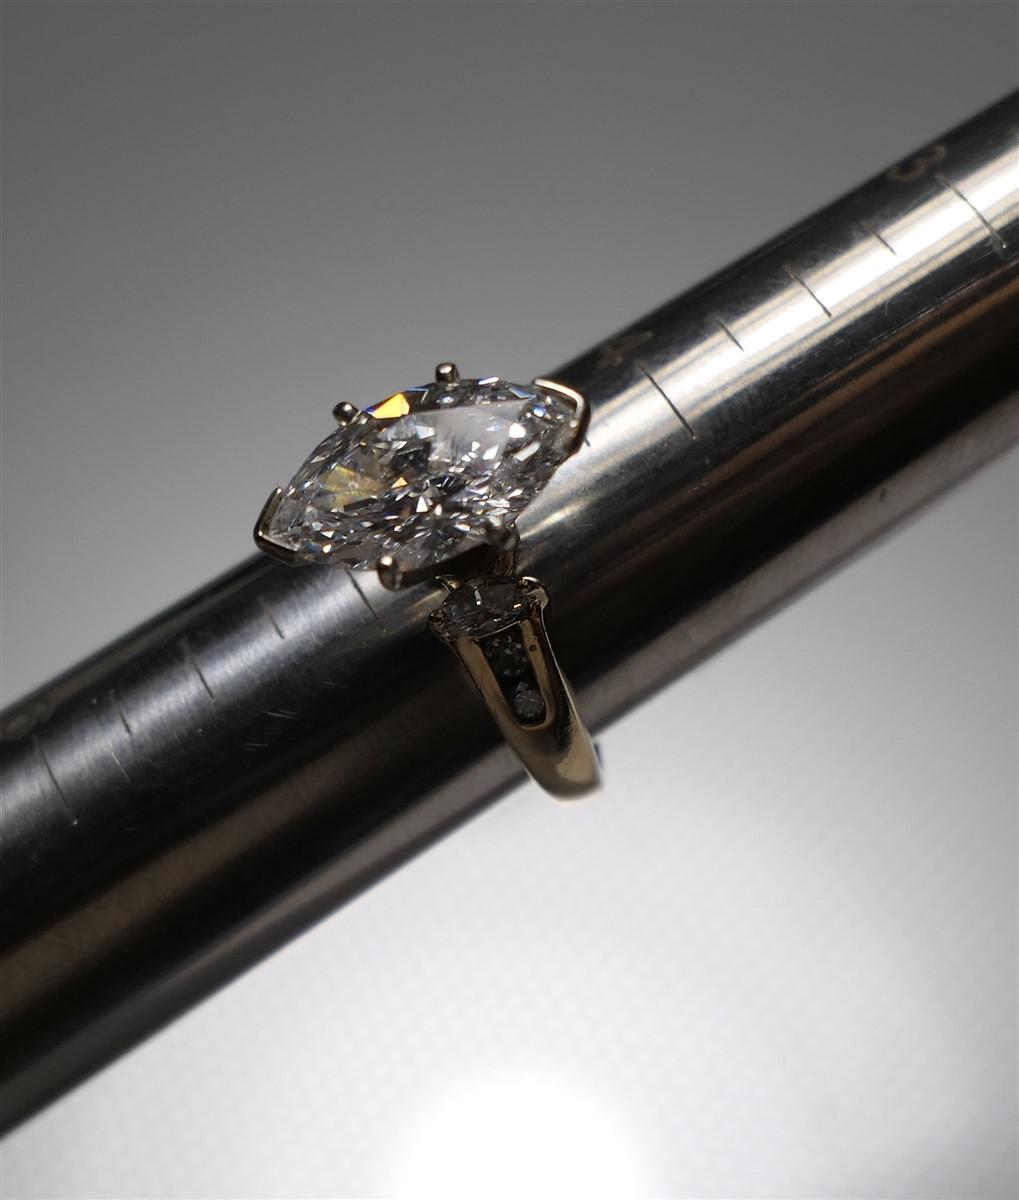 2.17 ct diamond engagement ring set in 14k gold